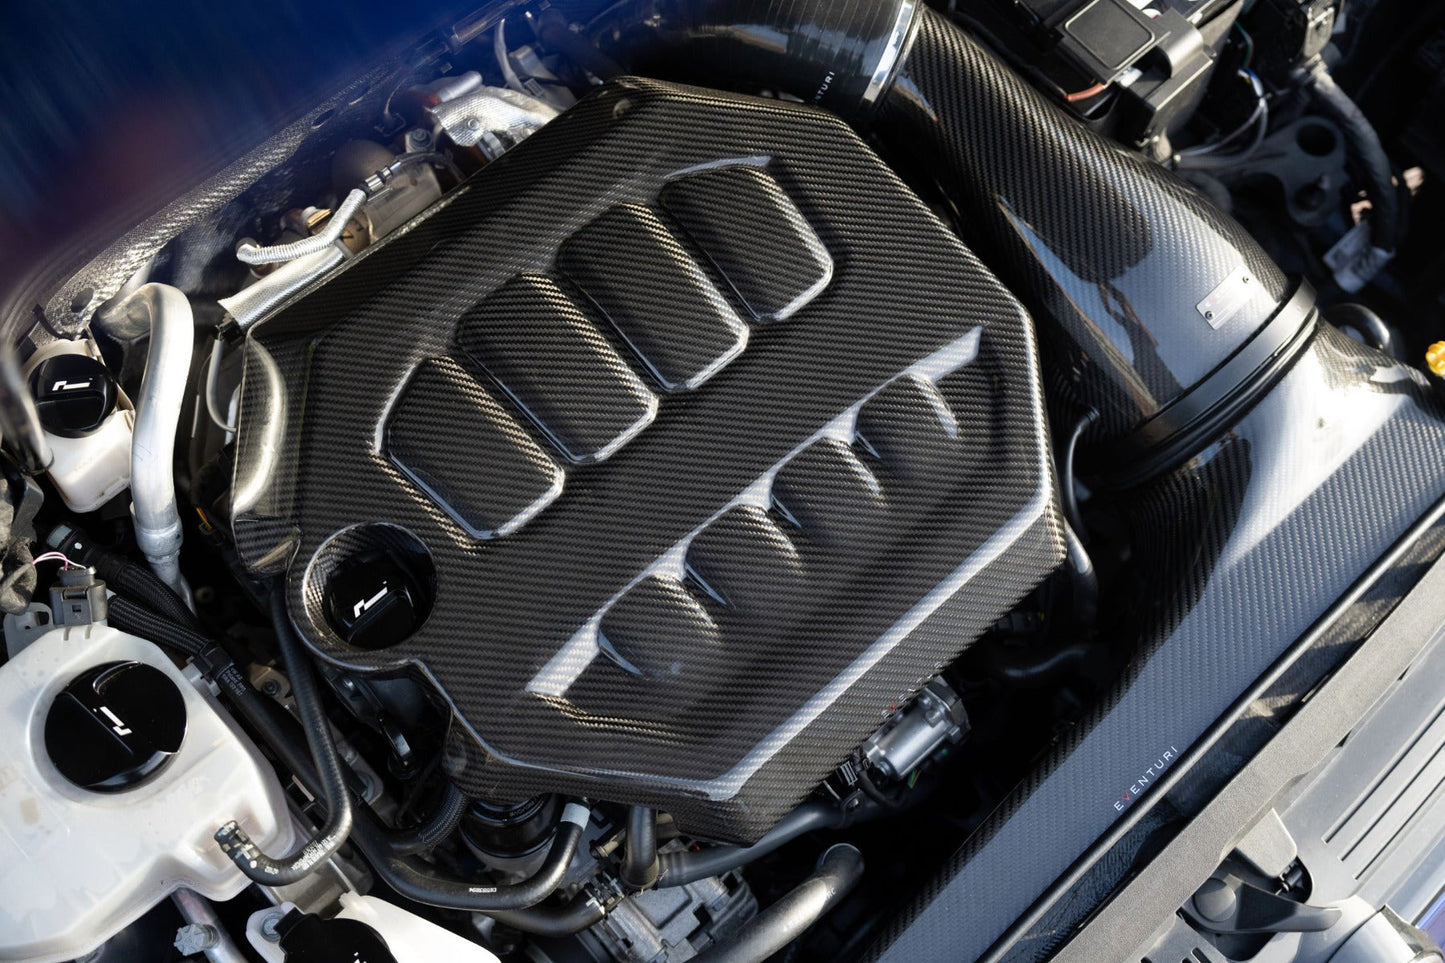 Eventuri Carbon Fibre Engine Cover - VW Golf MK8 GTI | R - Evolve Automotive